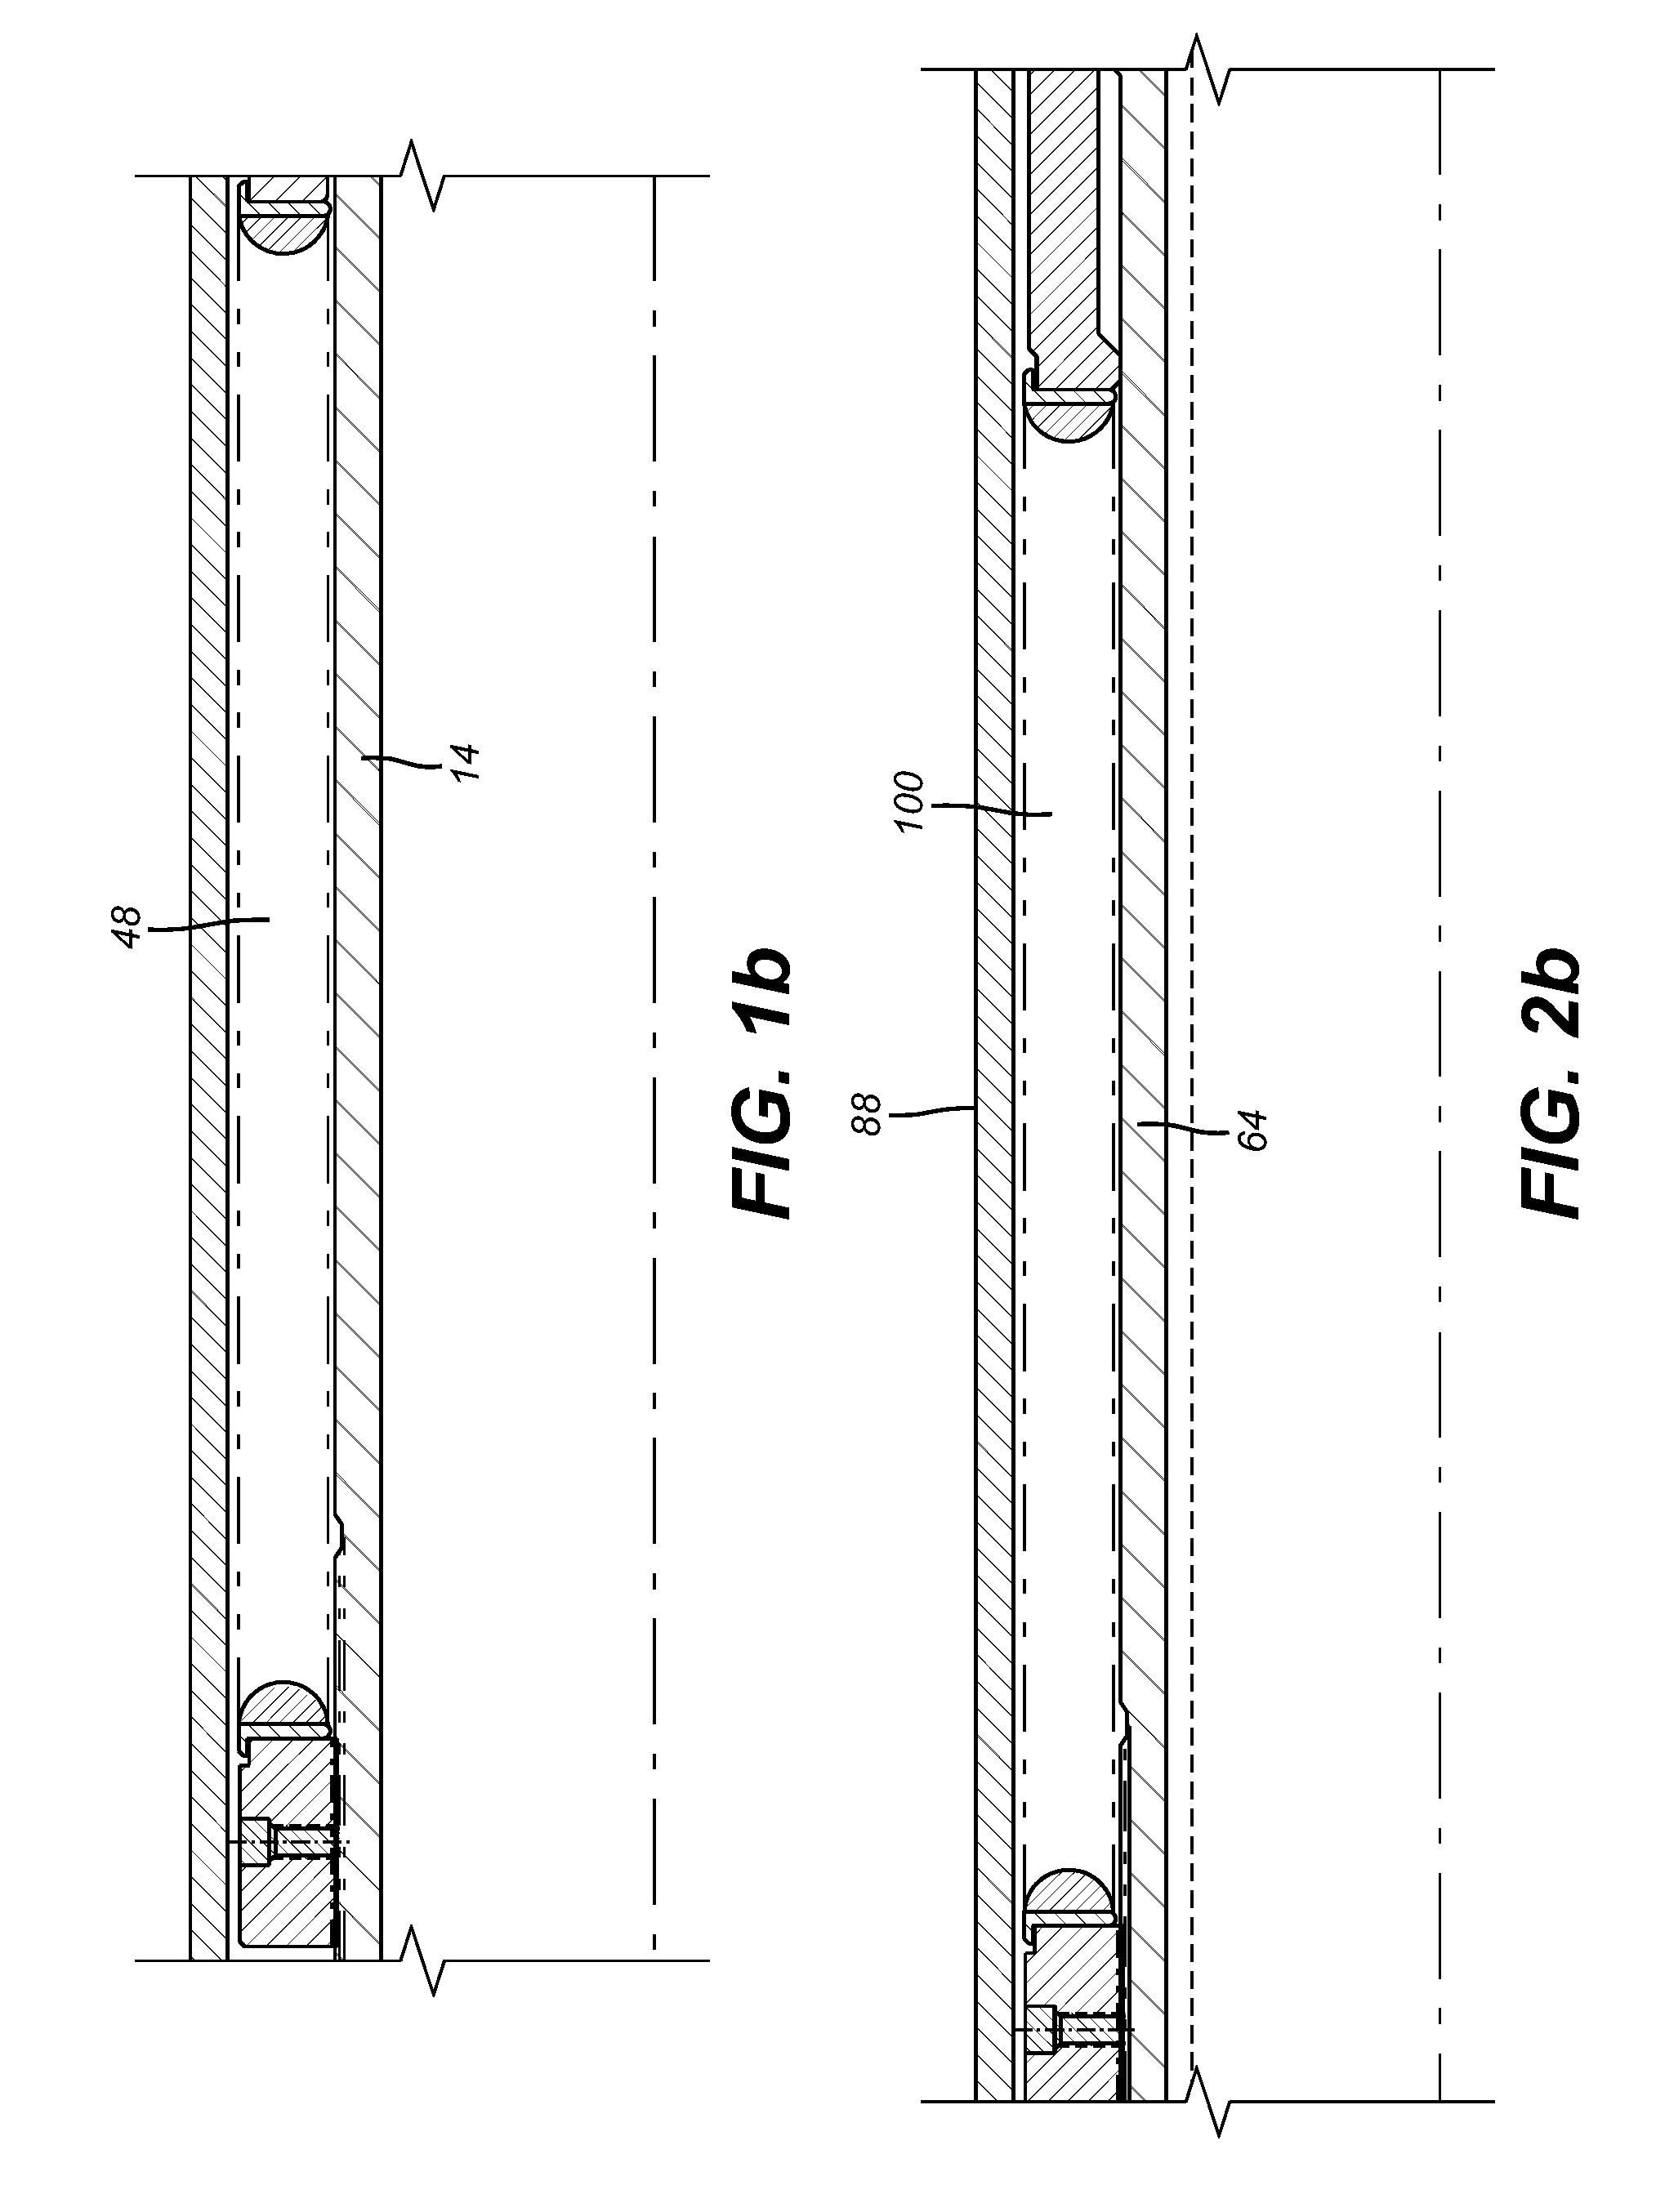 Modular hydraulic operator for a subterranean tool